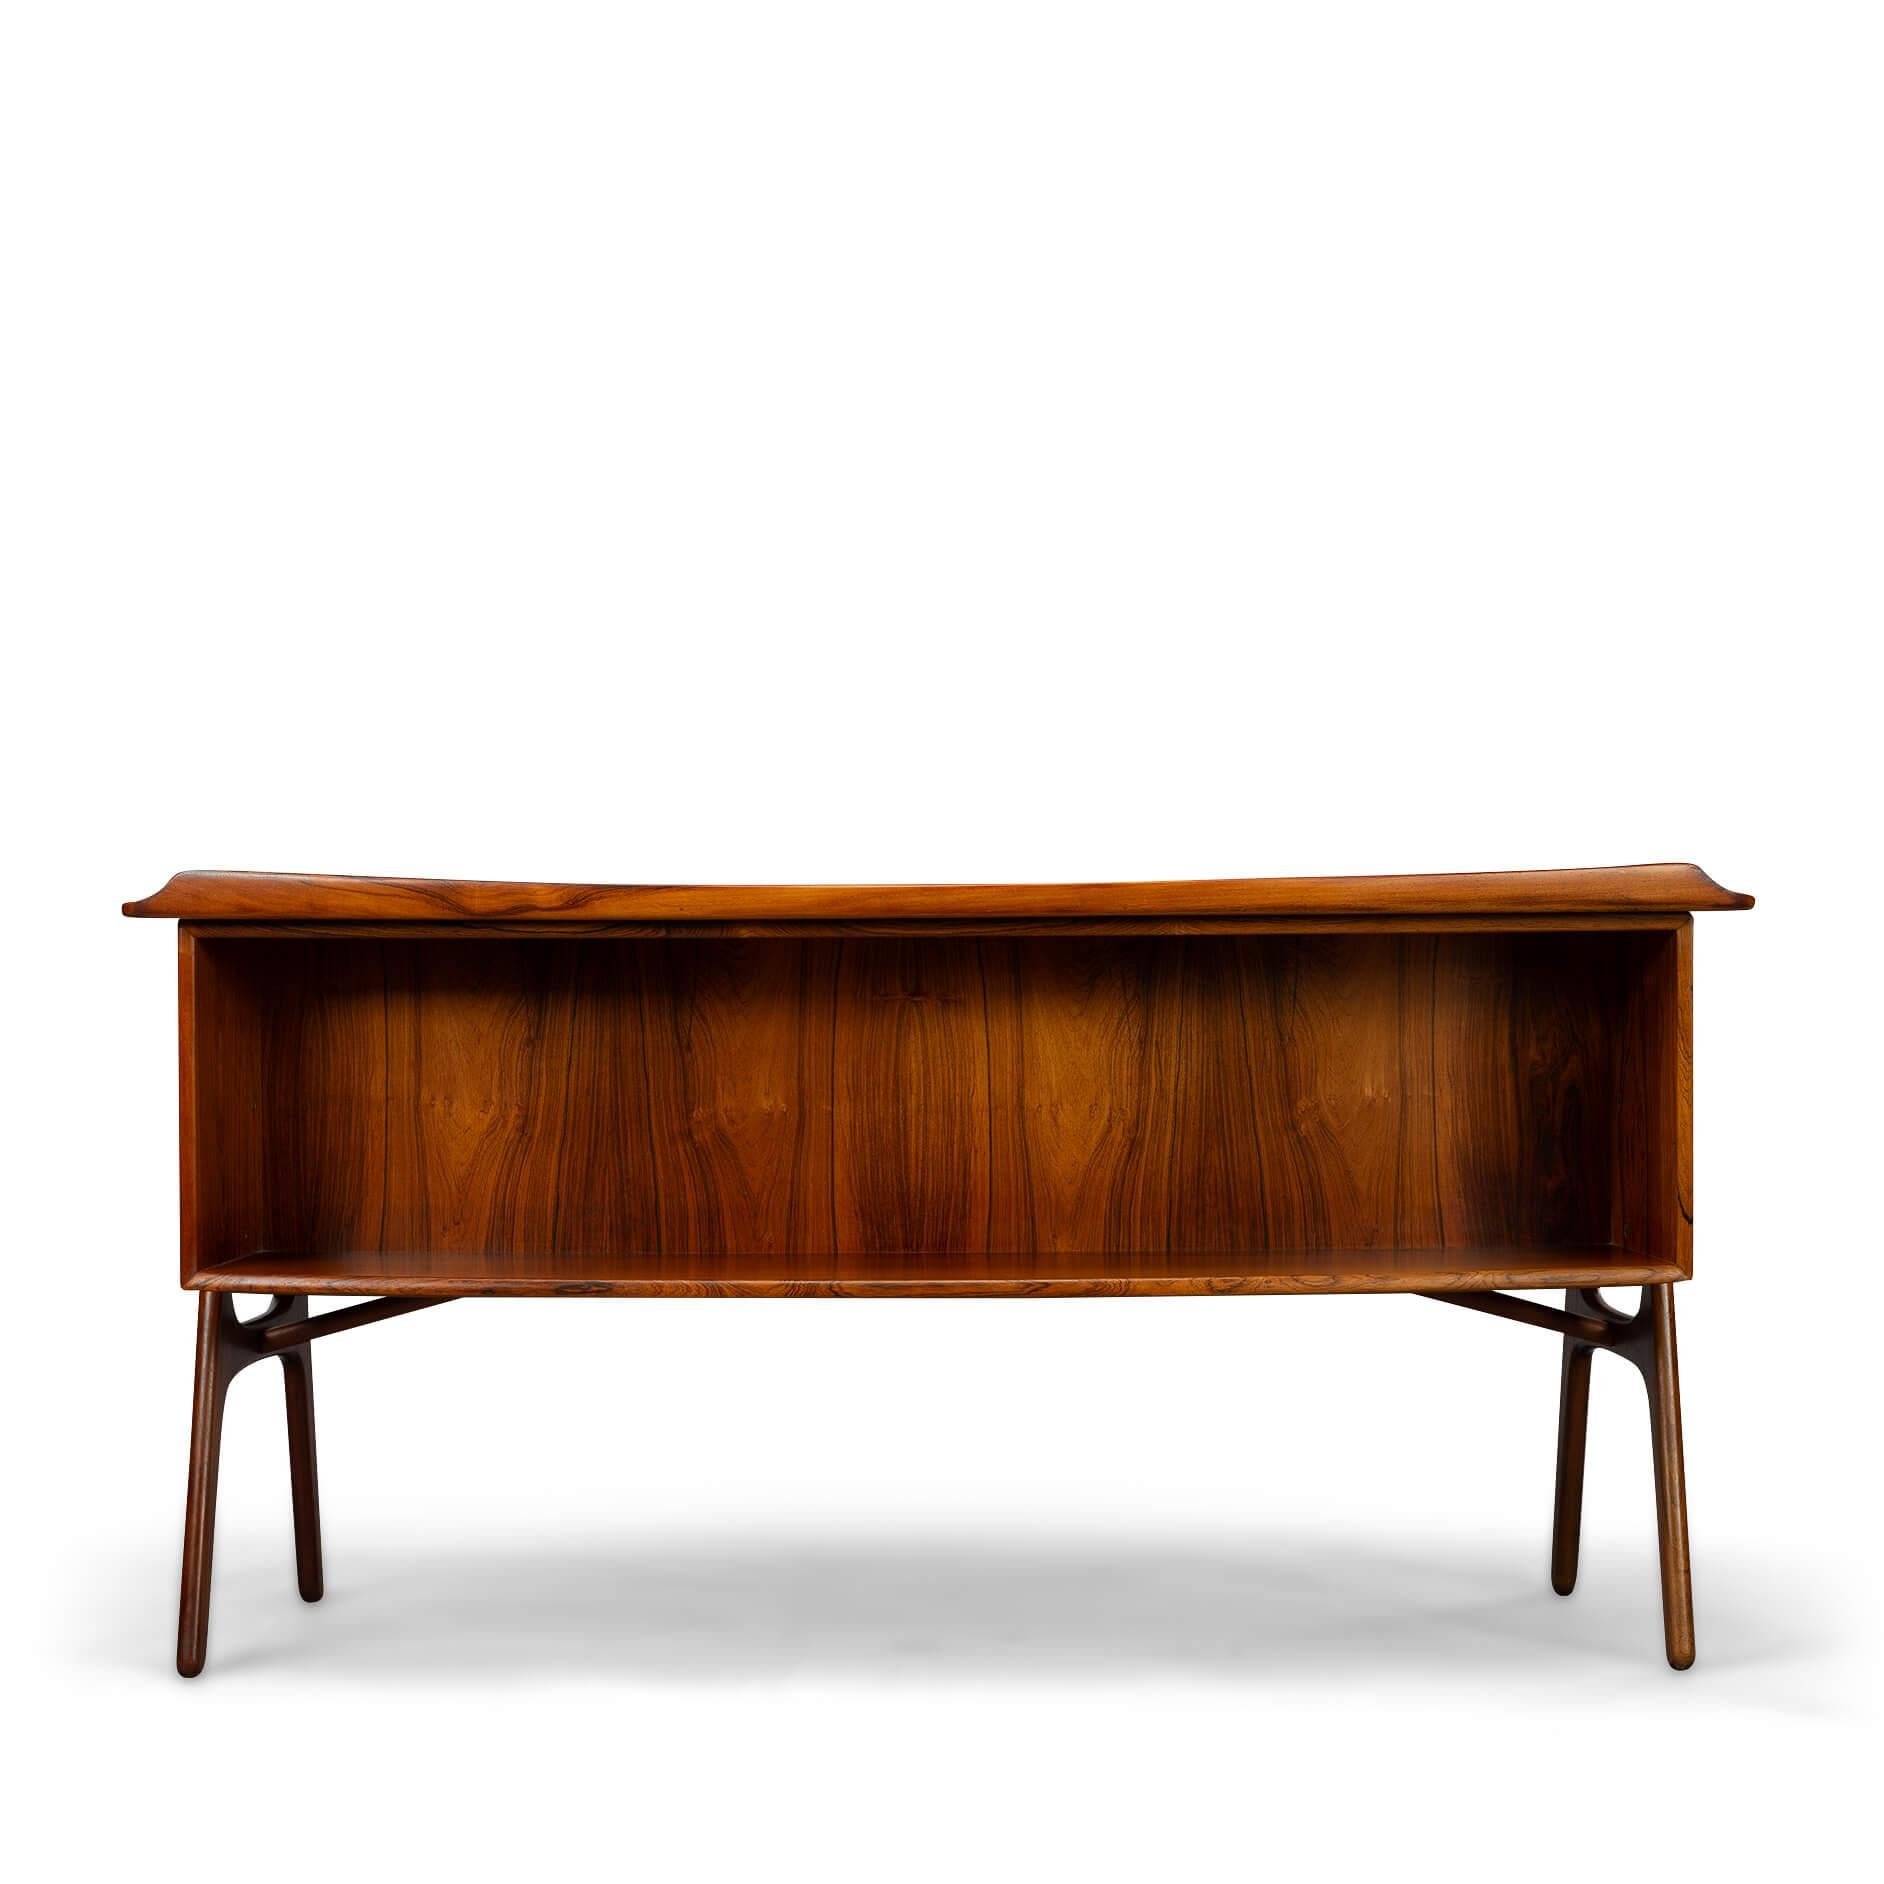 Veneer Danish Midcentury Modern Rosewood Desk by Svend Age Madsen for HP Hansen, 1960s For Sale